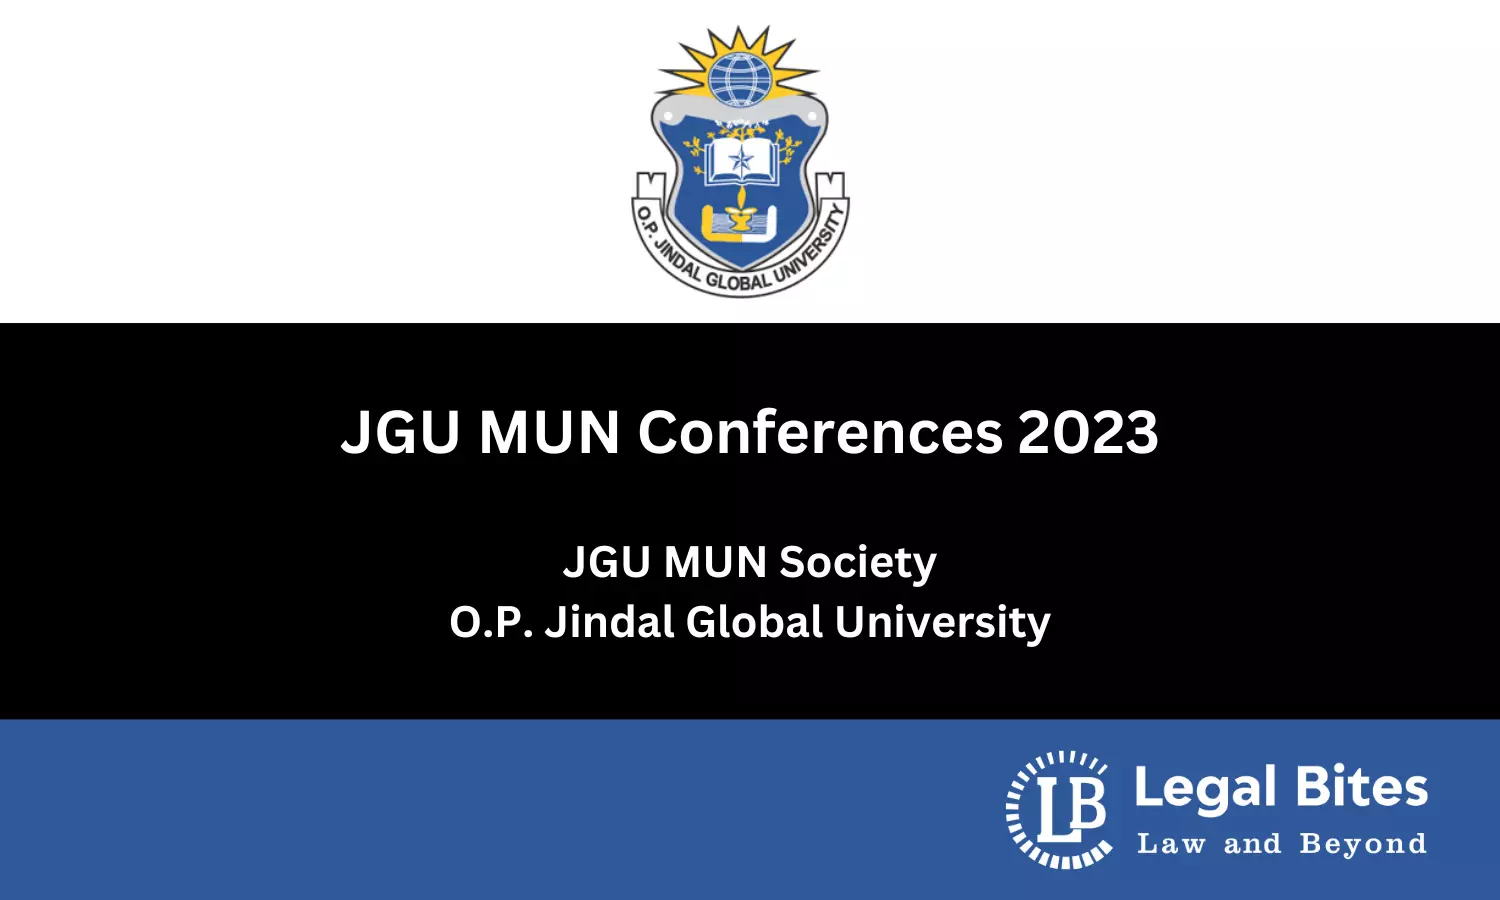 JGU MUN Conferences 2023 | O.P. Jindal Global University